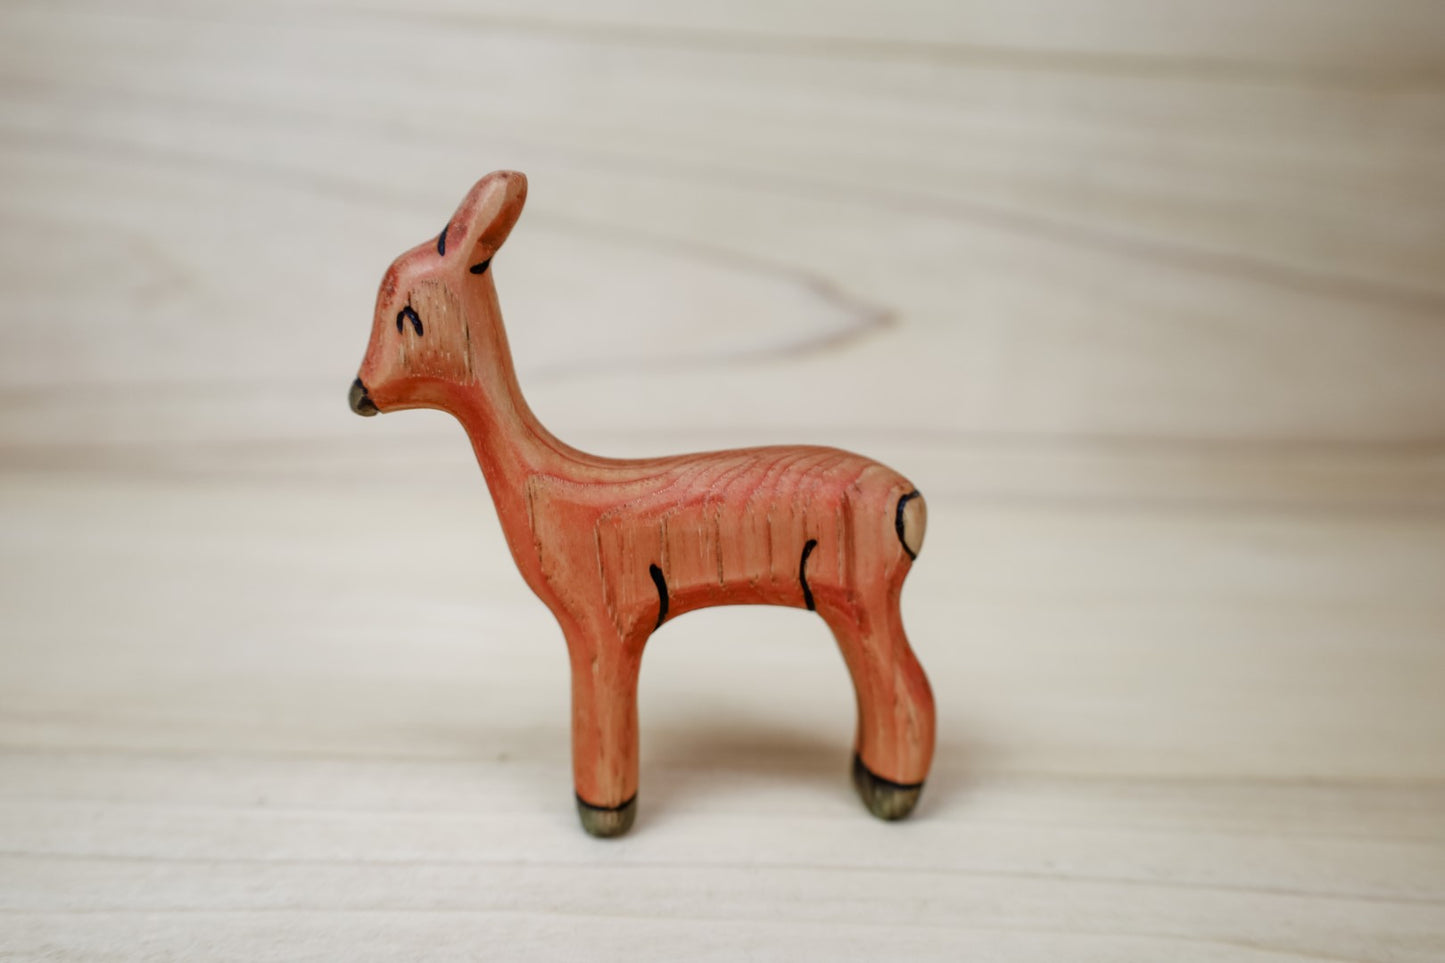 Wooden Deer Toy- Buck Or Doe